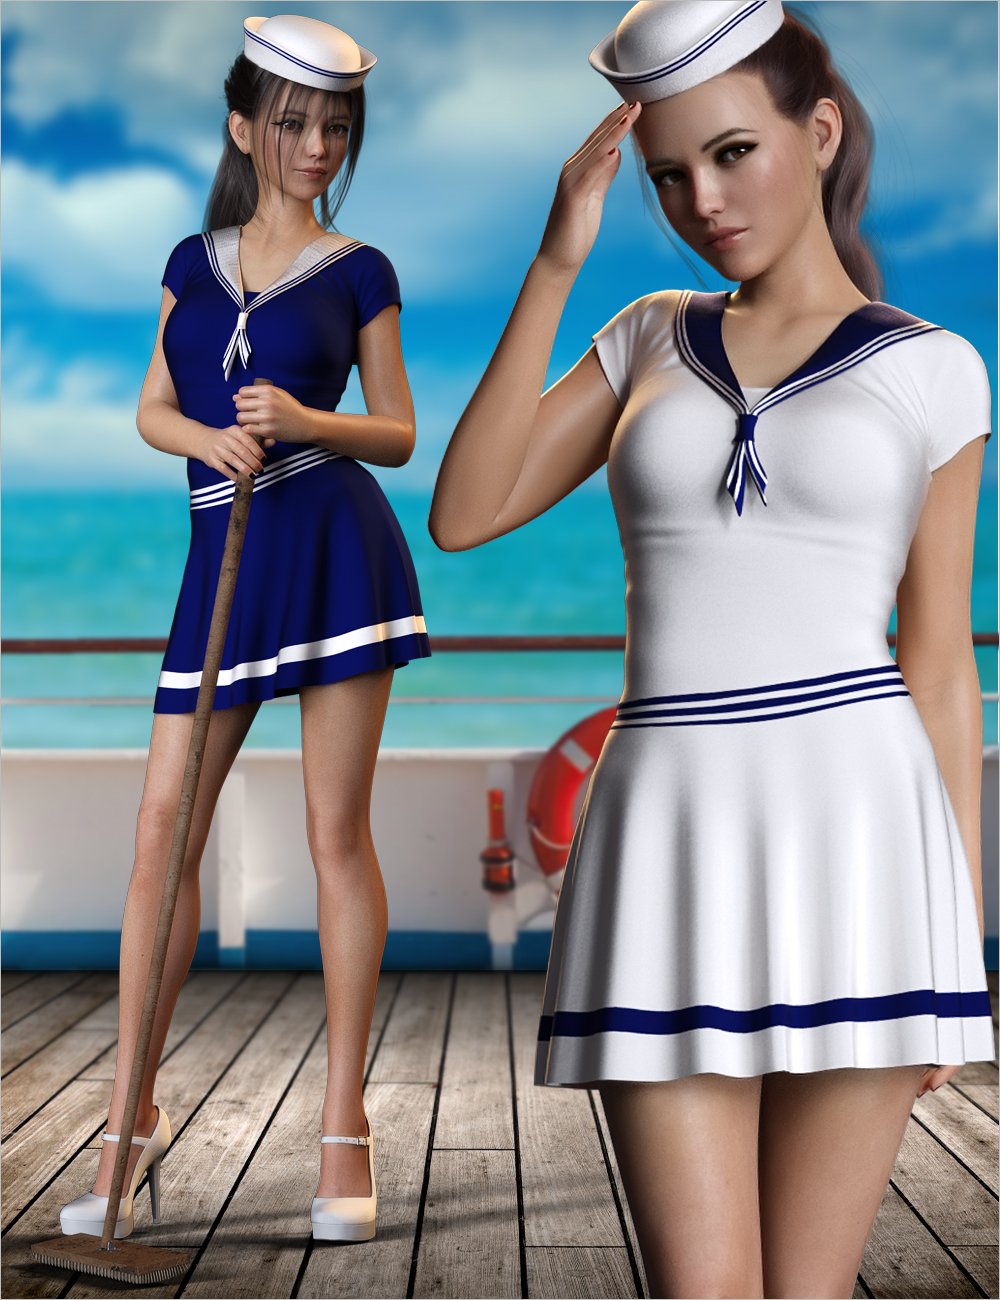 dForce Navy Sailor Outfit Set for Genesis 8 and 8.1 Females by: MytilusProShot, 3D Models by Daz 3D